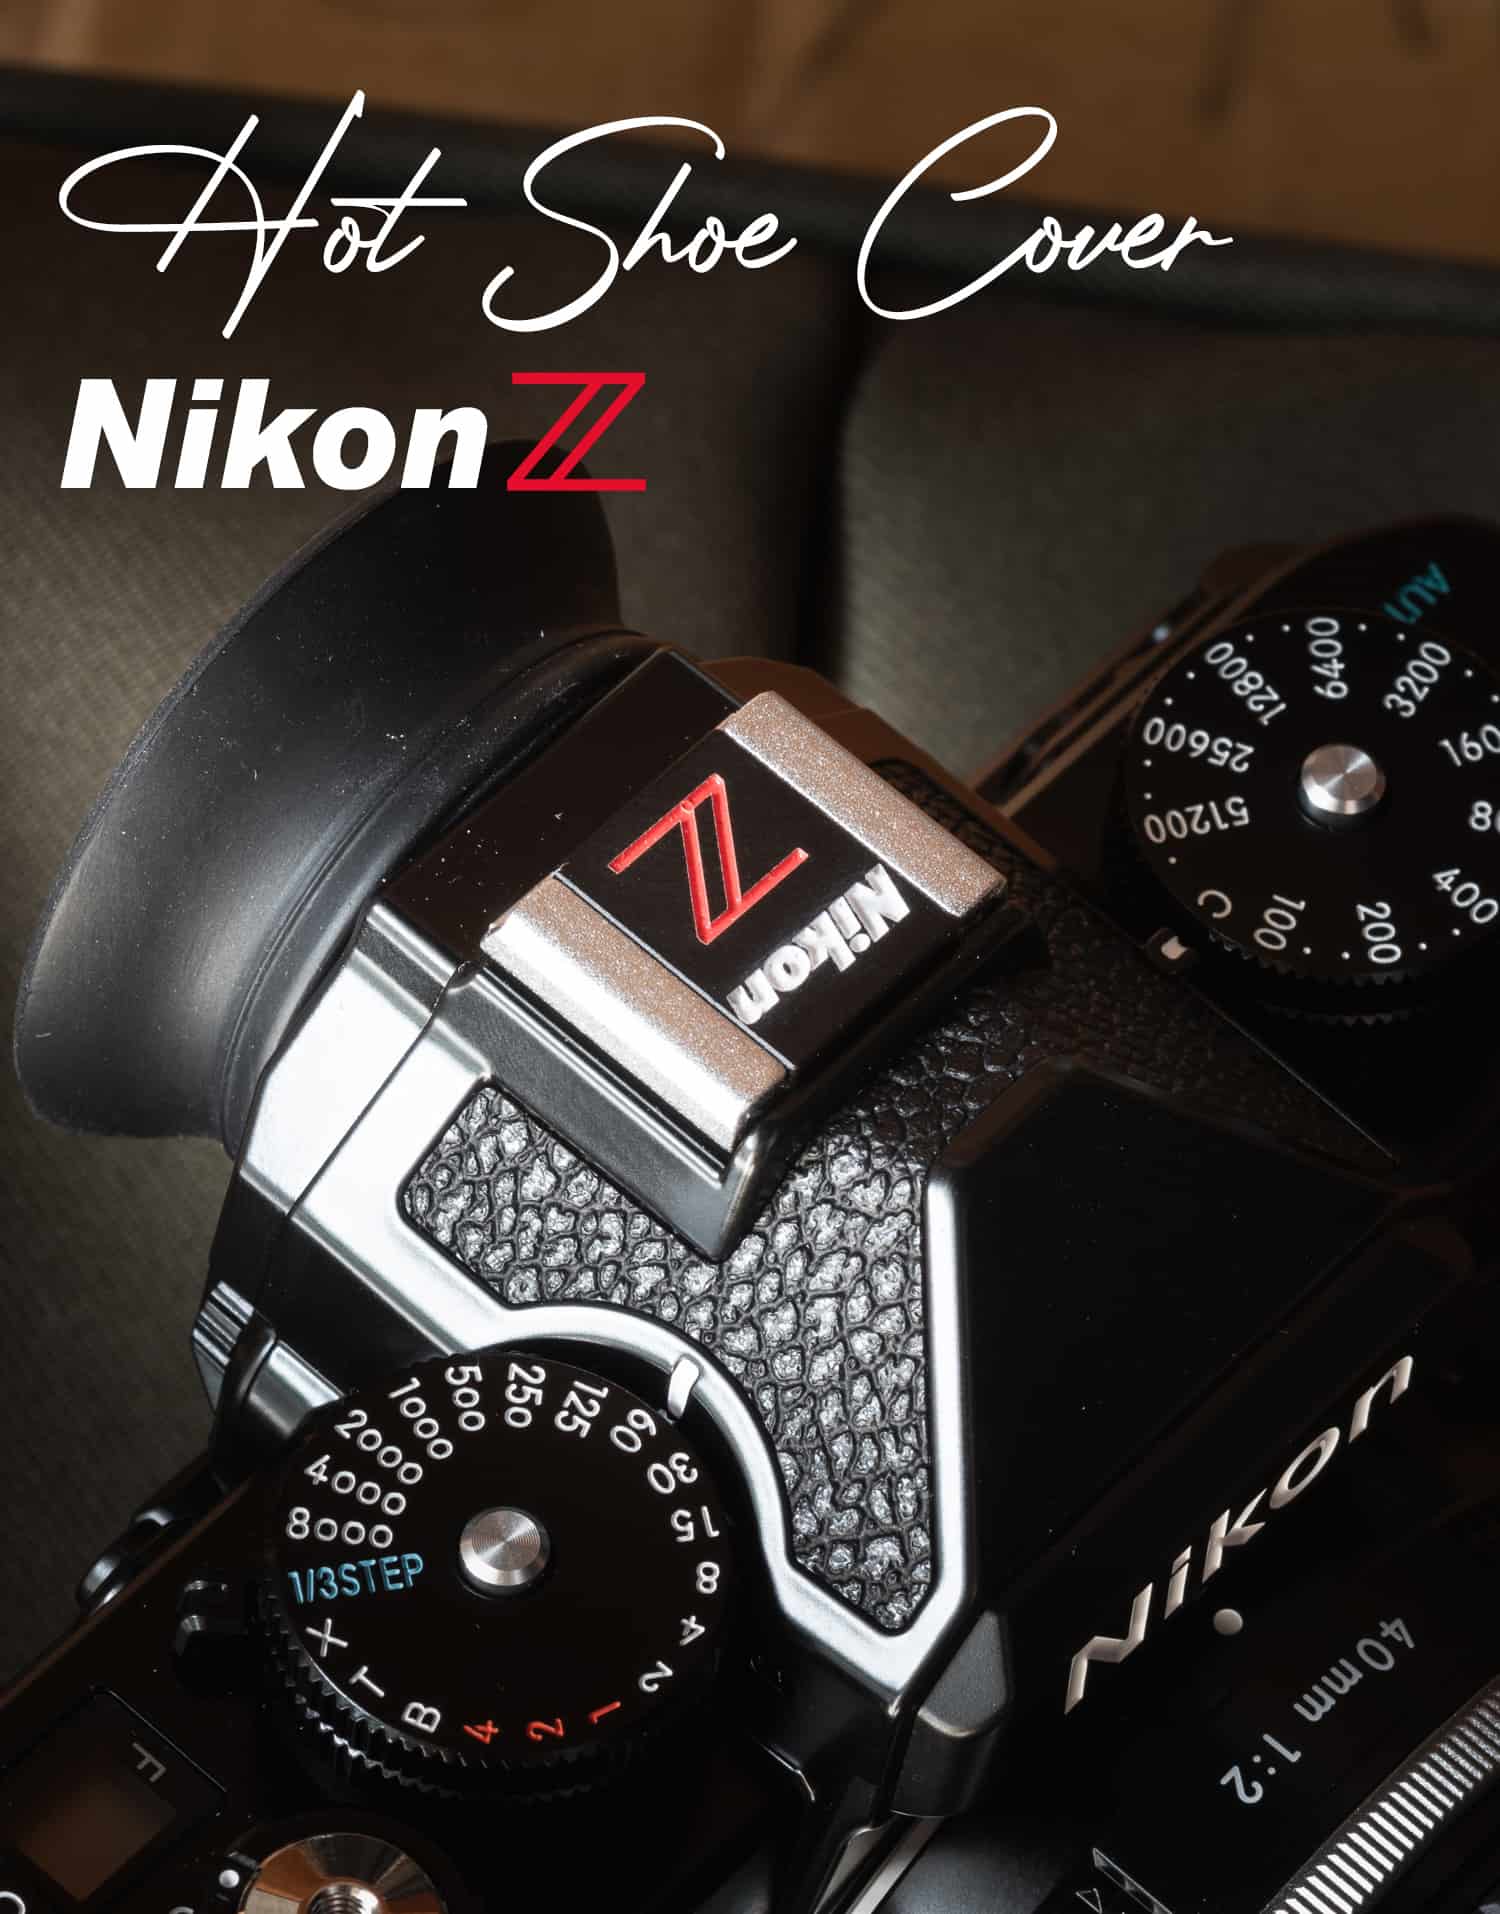 Hot Shoe Cover Nikon Z ตัวปิดช่องแฟลช สีดำ